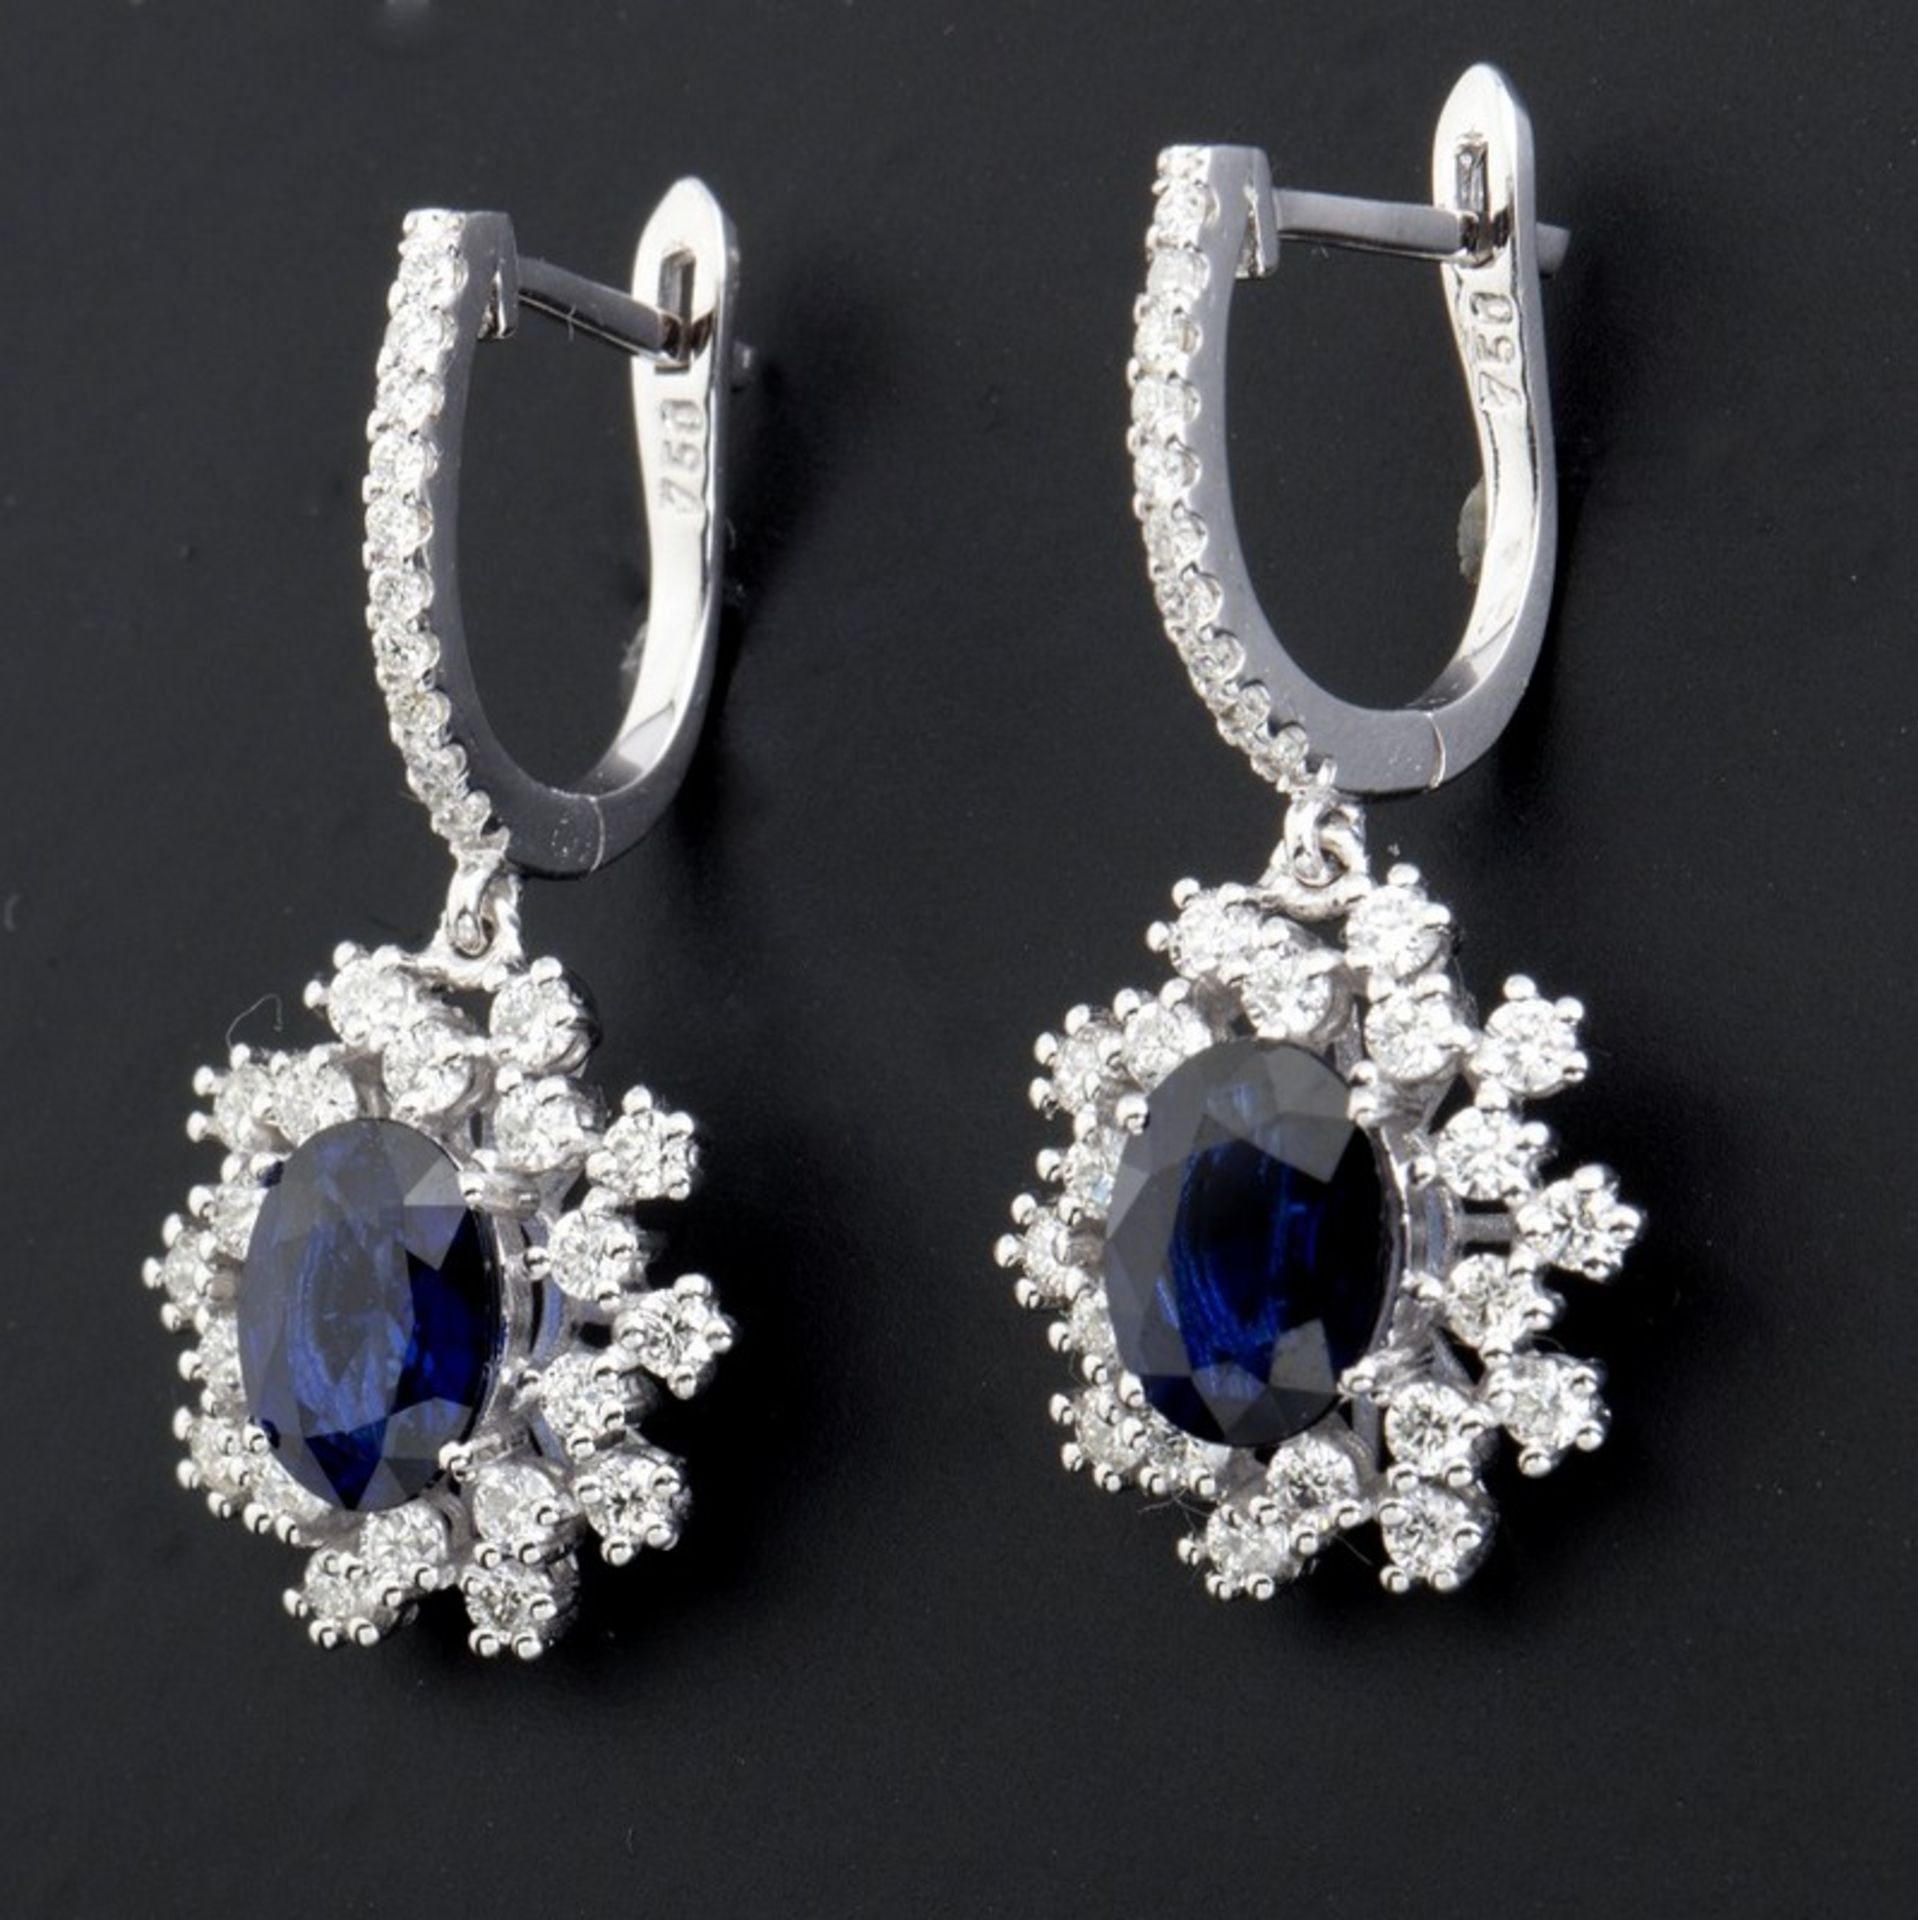 Certificated 18K White Gold Diamond & Sapphire Earring - Image 2 of 5